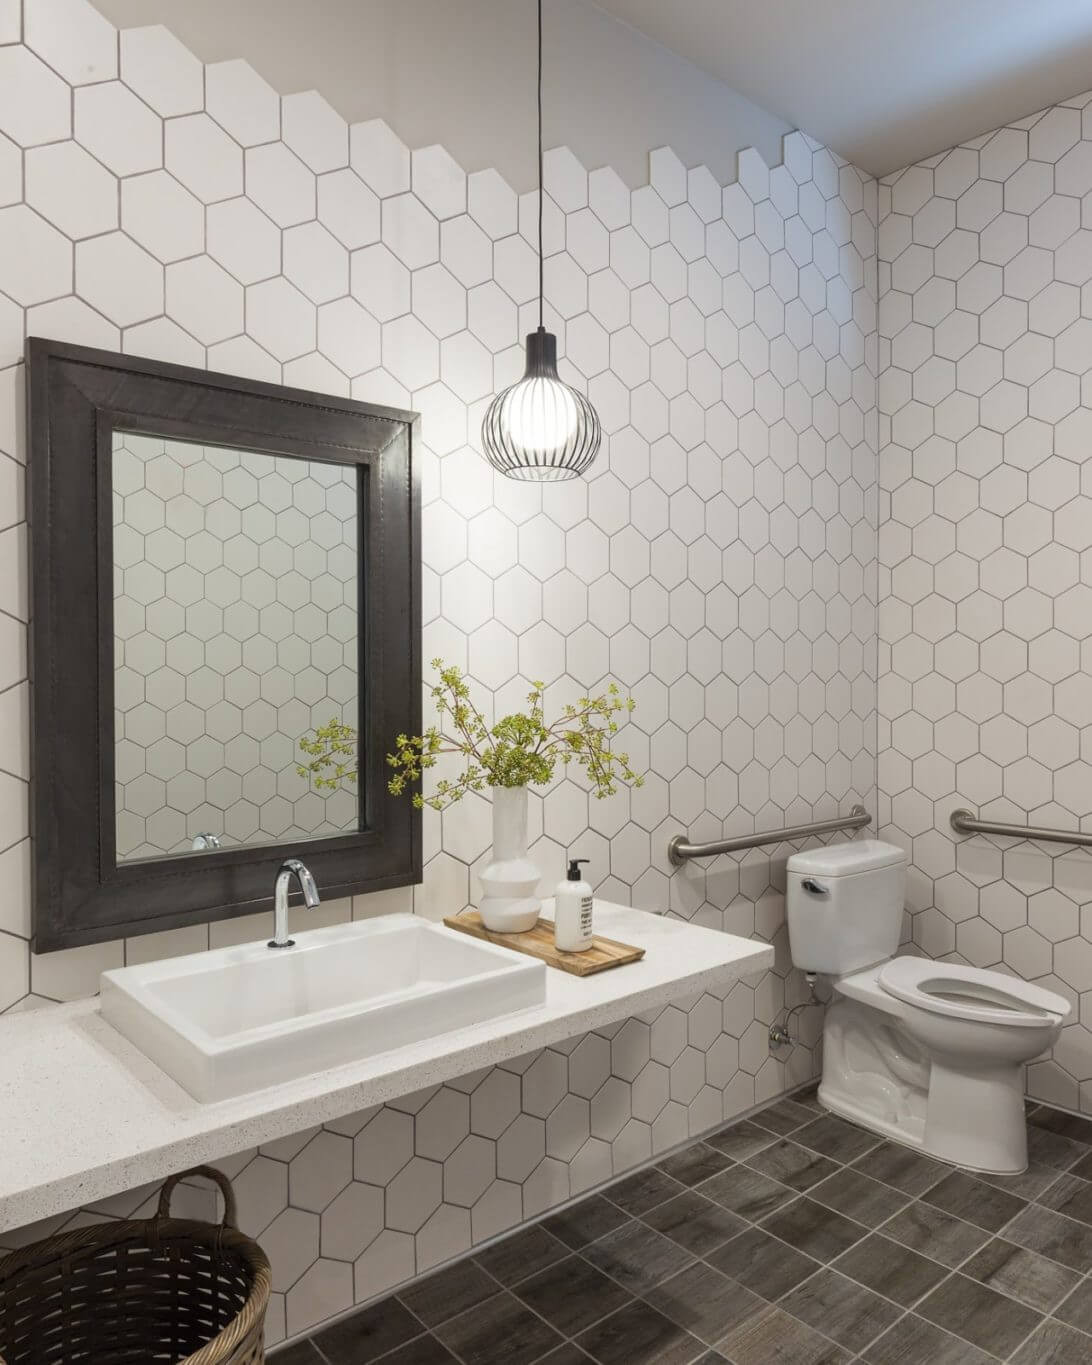 Bathroom Wall Tile Beautiful Your Plete Guide to Bathroom Tile